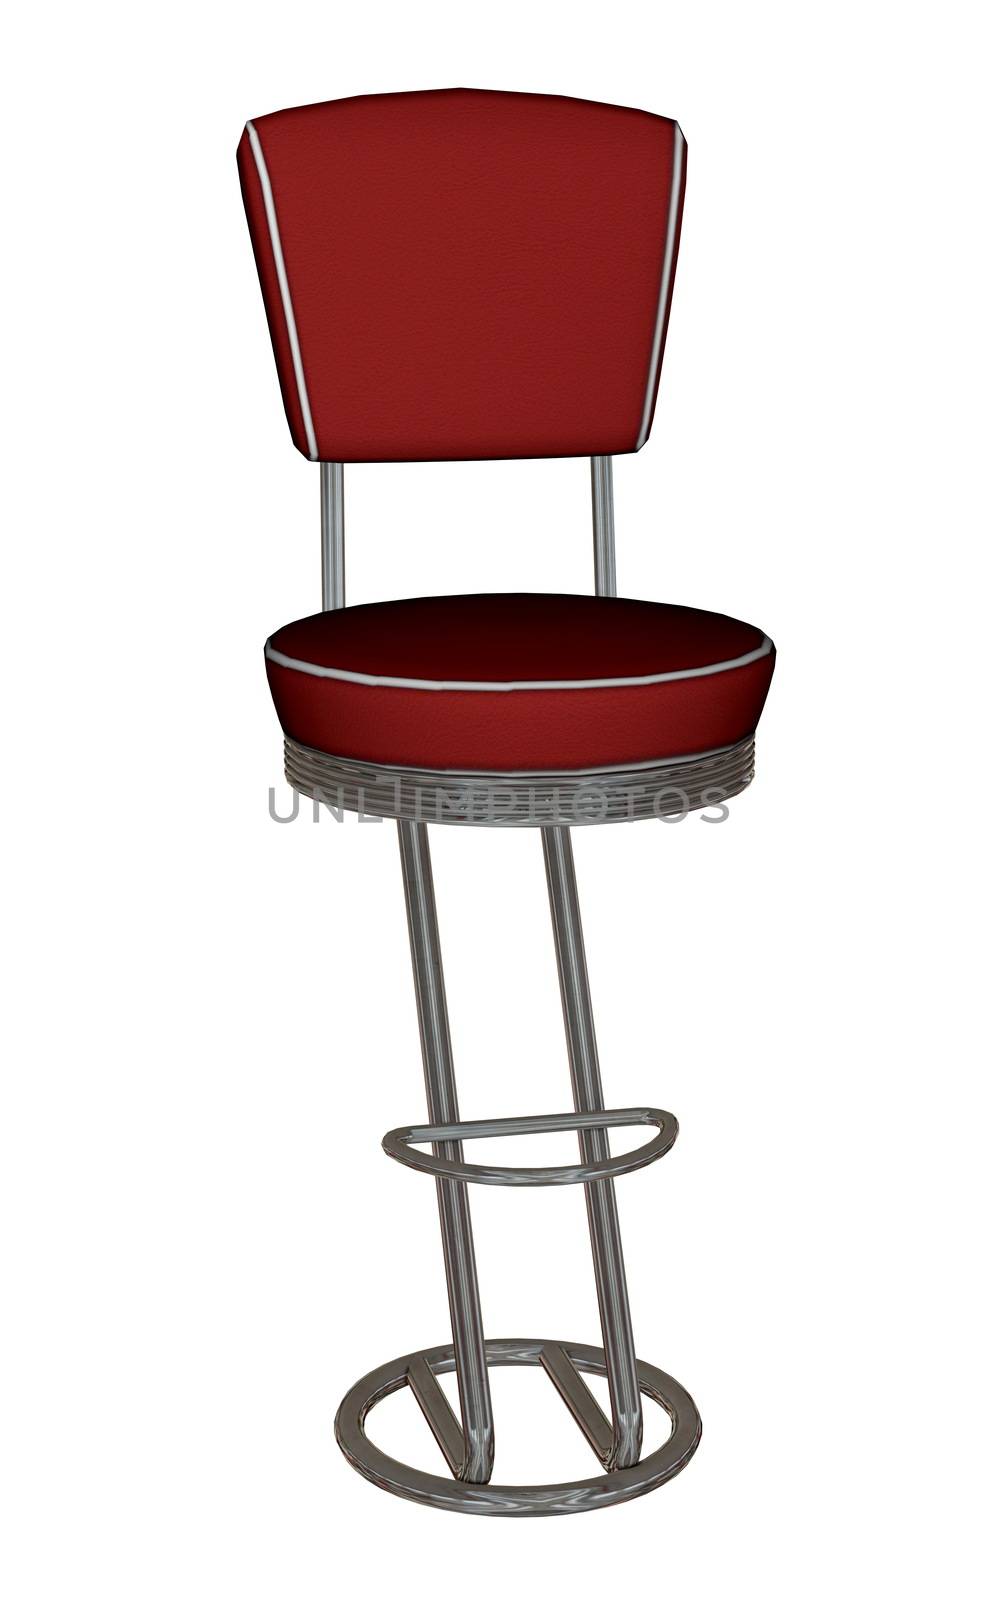 Red bar stool - 3D render by Elenaphotos21